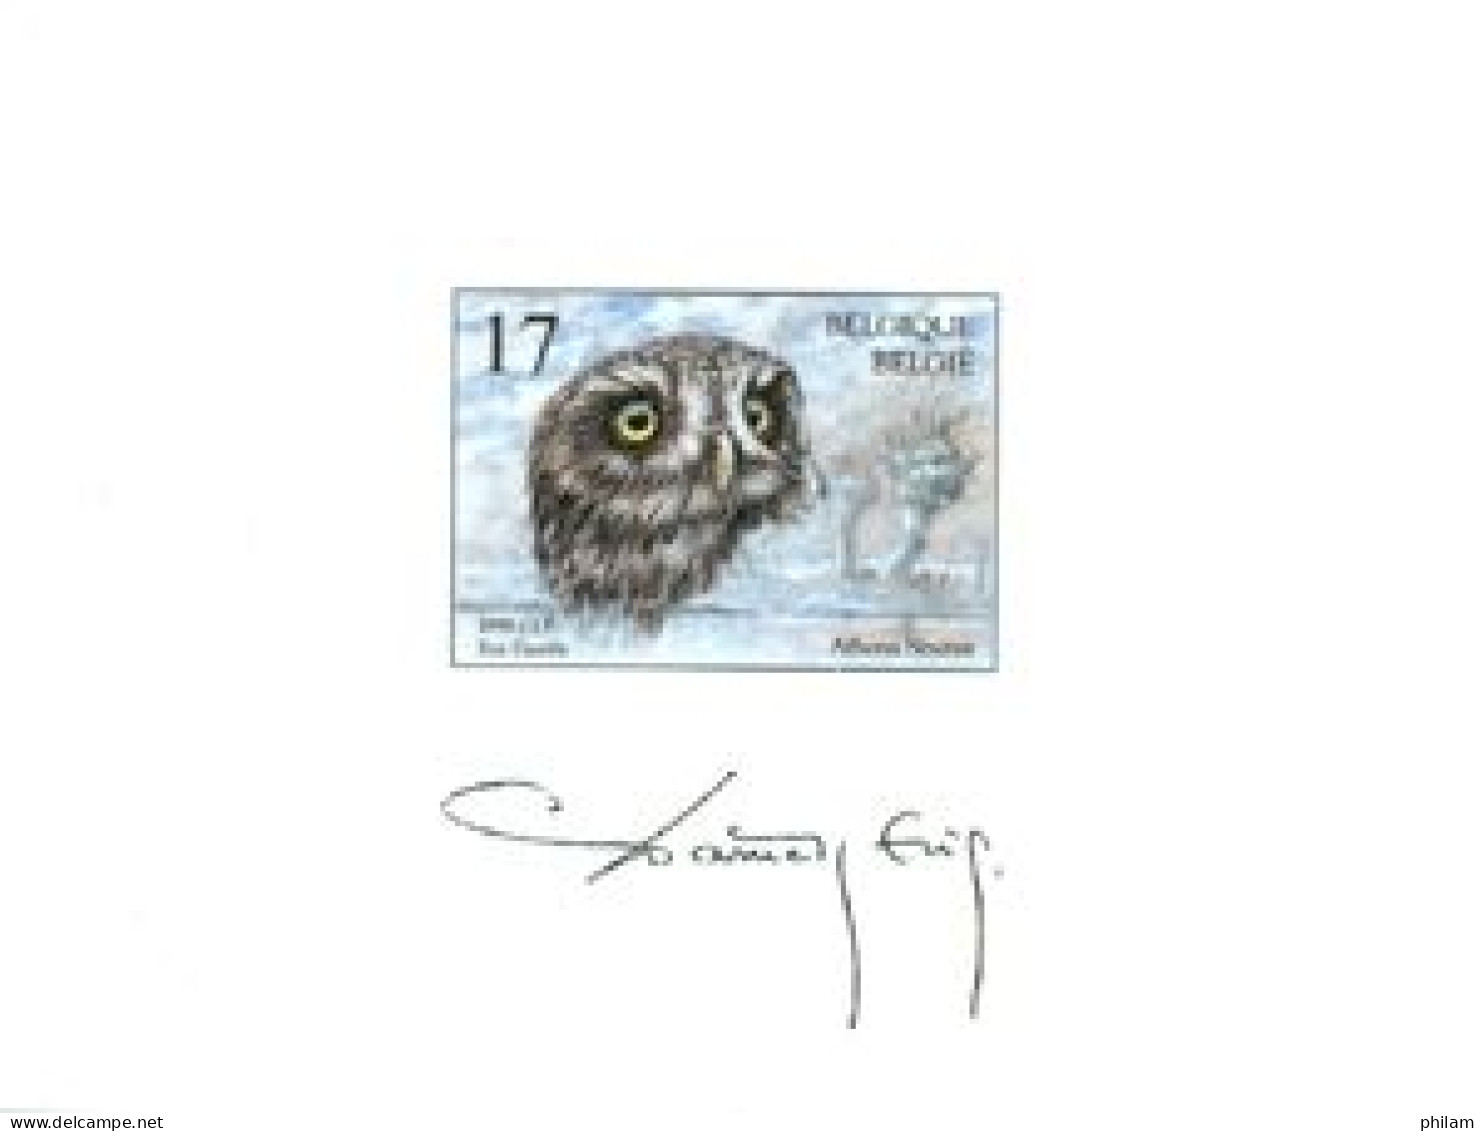 BELGIQUE 1999 - NA 6 - NL - Hibou - Uil - Owl - Texte En Néerlandais/Nederlandse Text - Abgelehnte Entwürfe [NA]